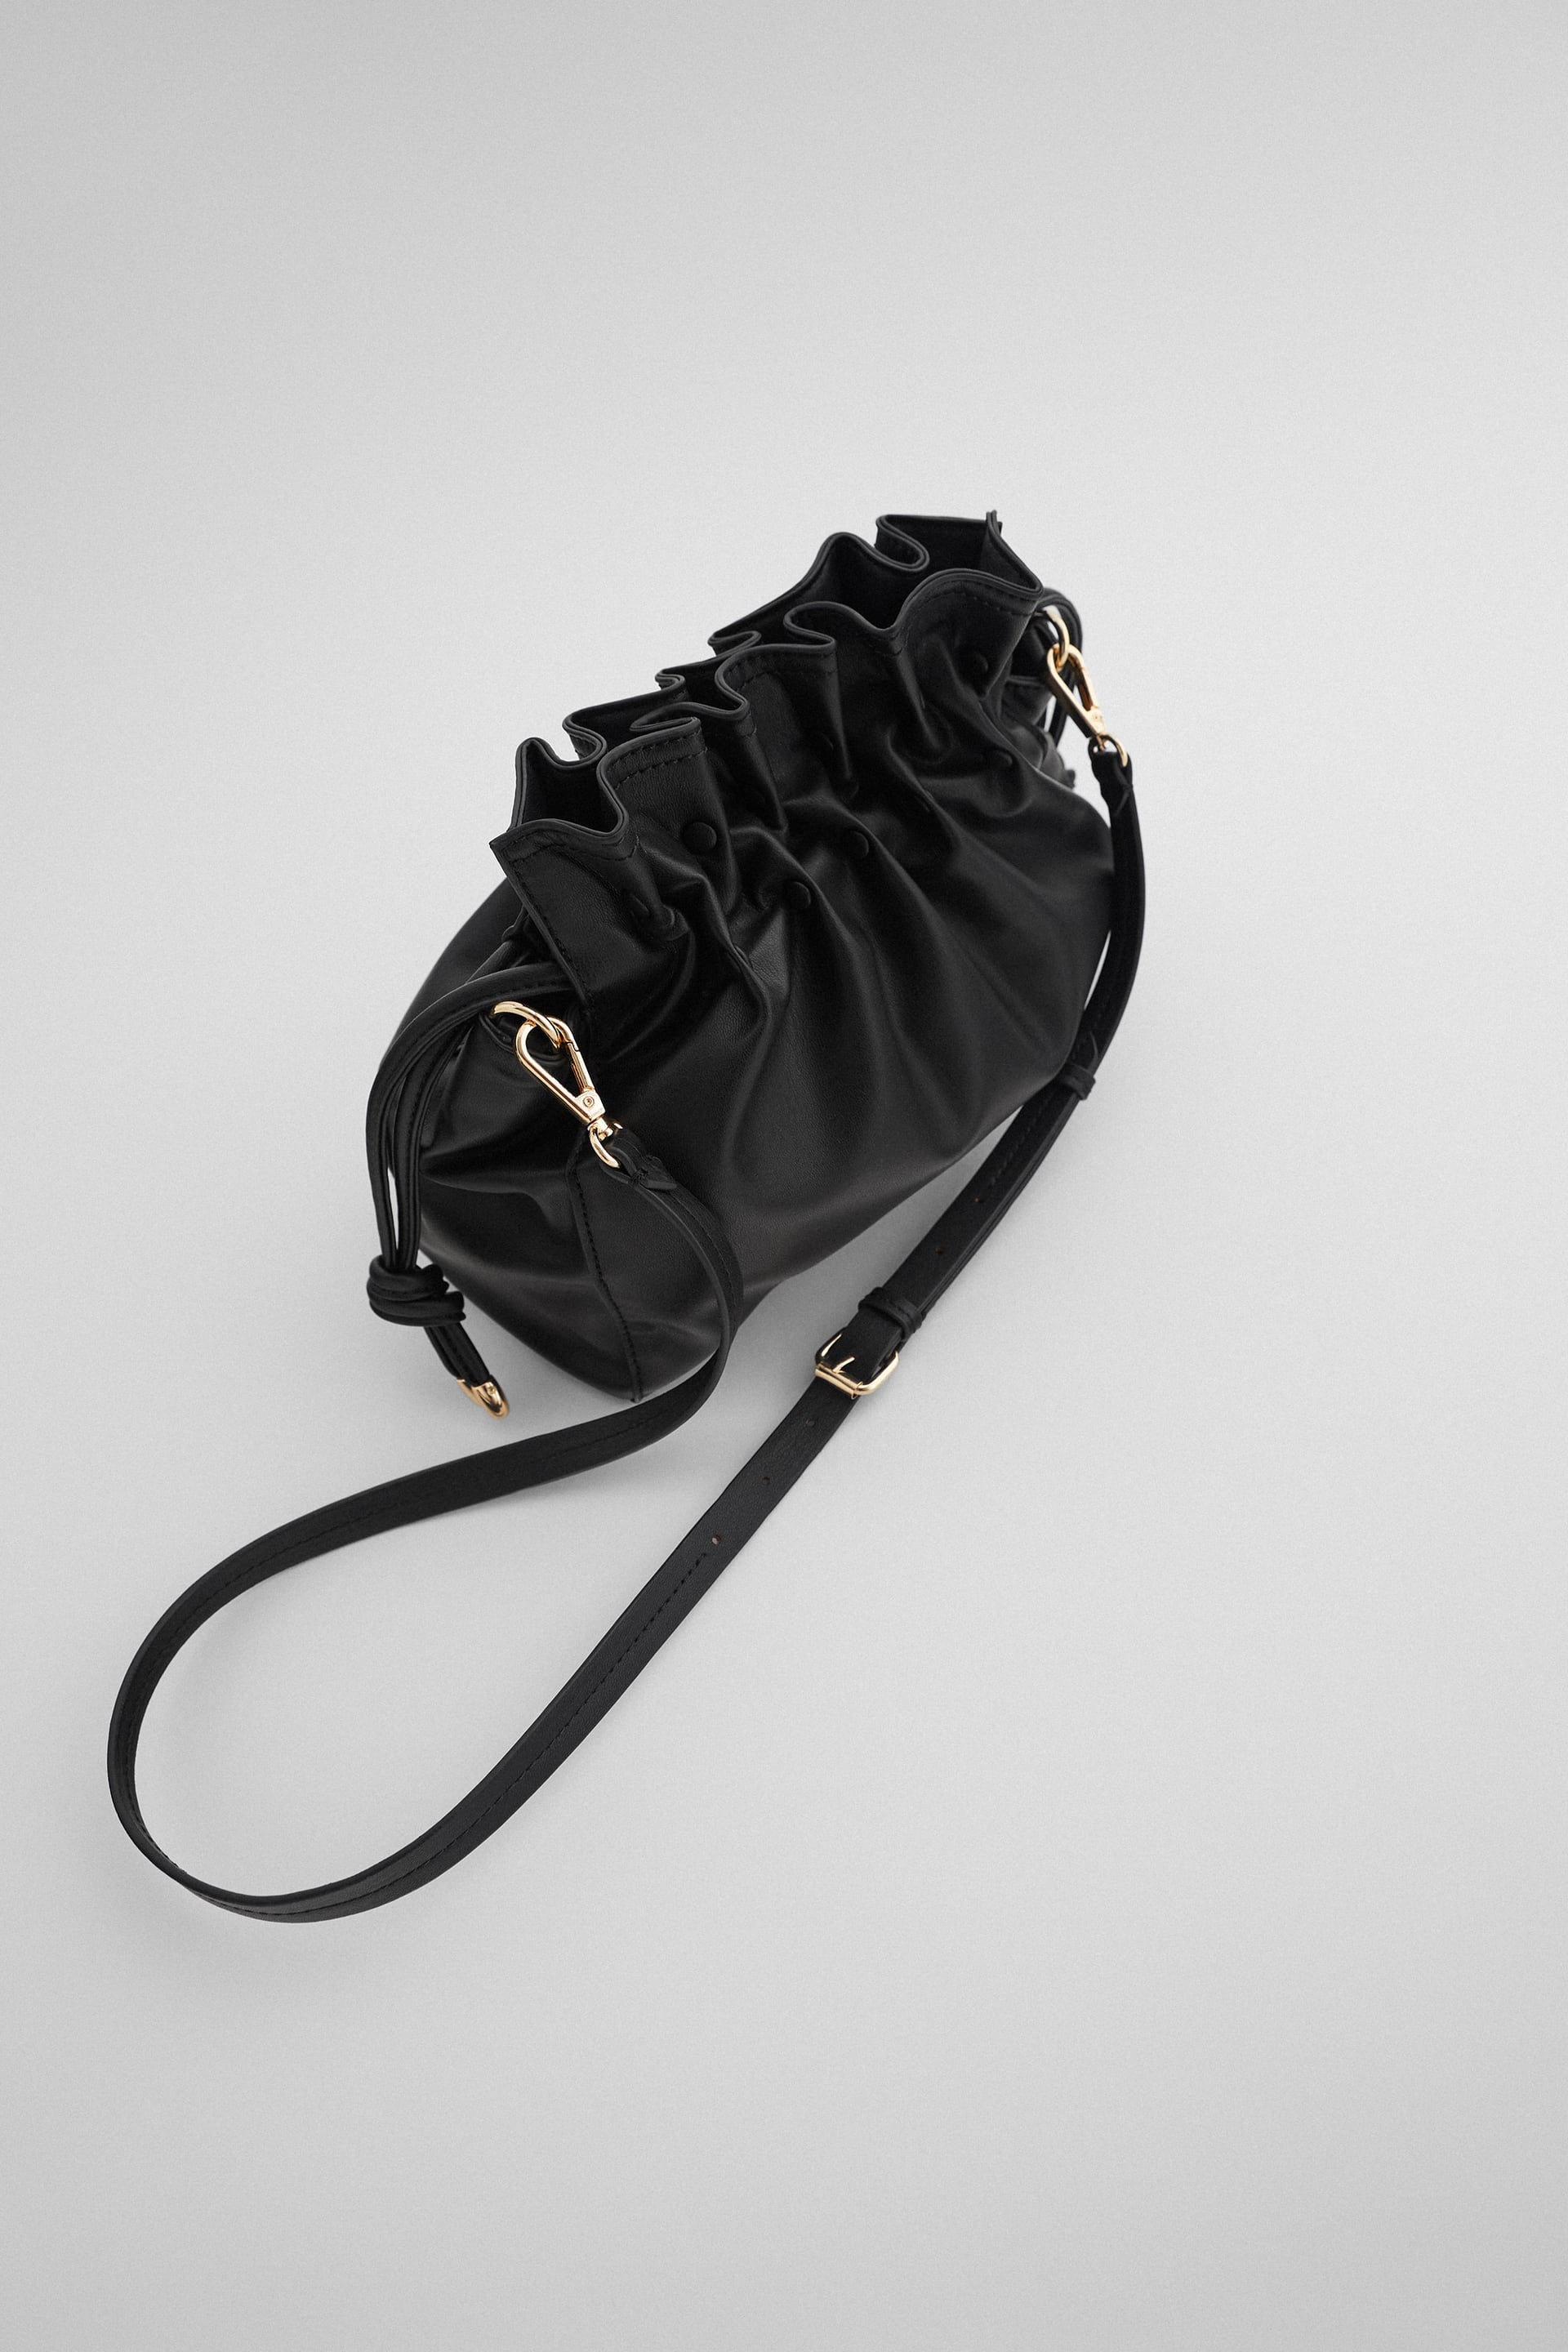 Zara BUCKET BAG WITH GATHERING - 73610546-040-3